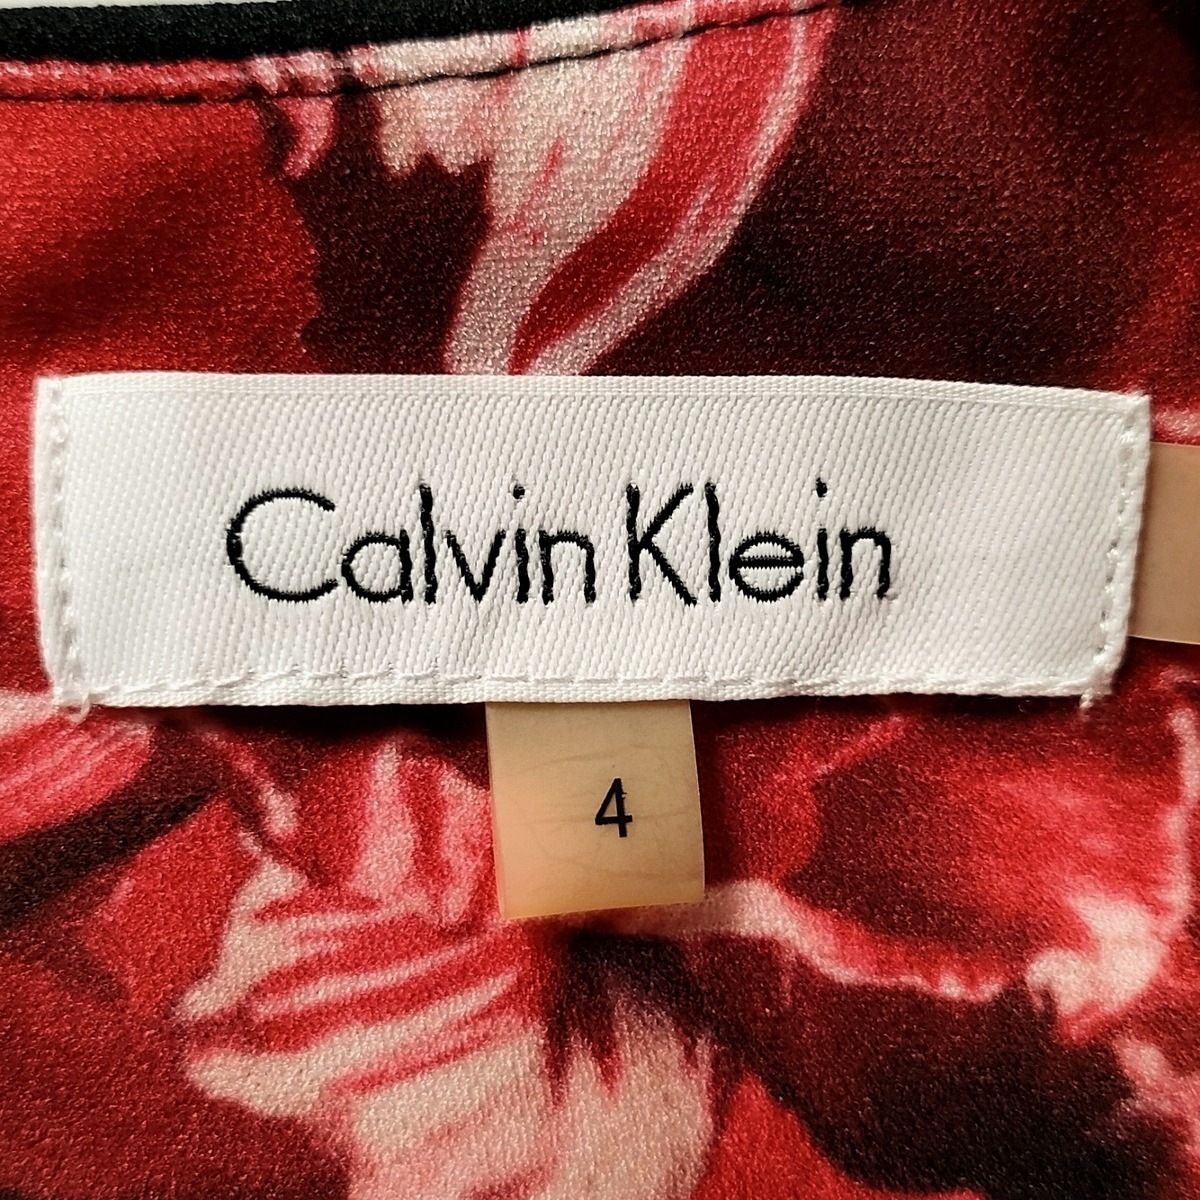 CalvinKlein(カルバンクライン) ワンピース サイズ4 XL レディース ...